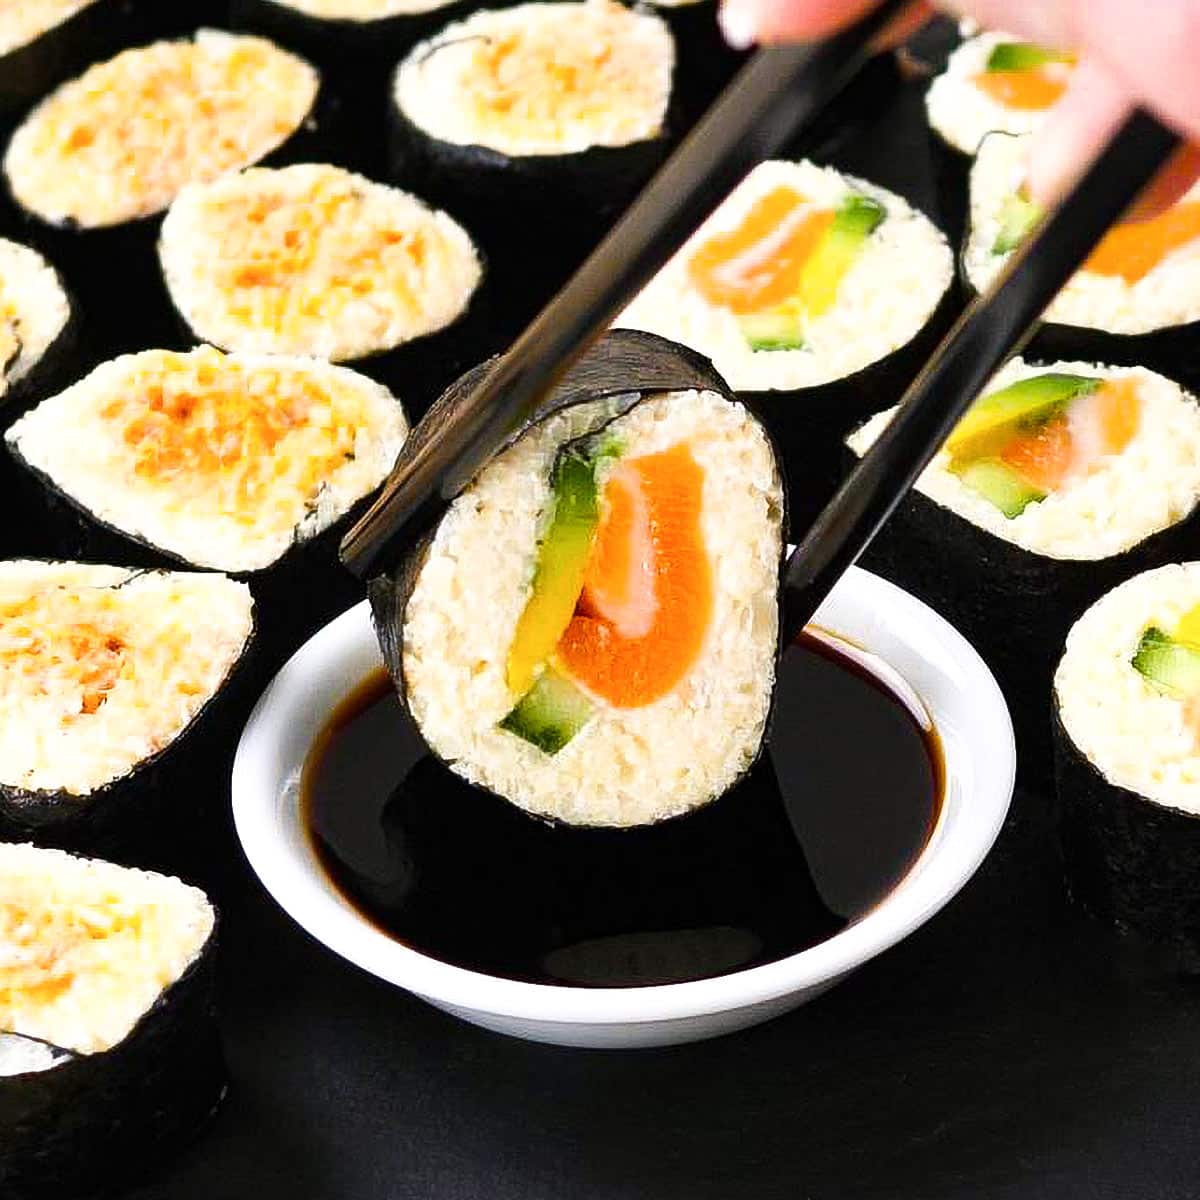 Keto sushi roll in chopsticks being dipped in tamari sauce.